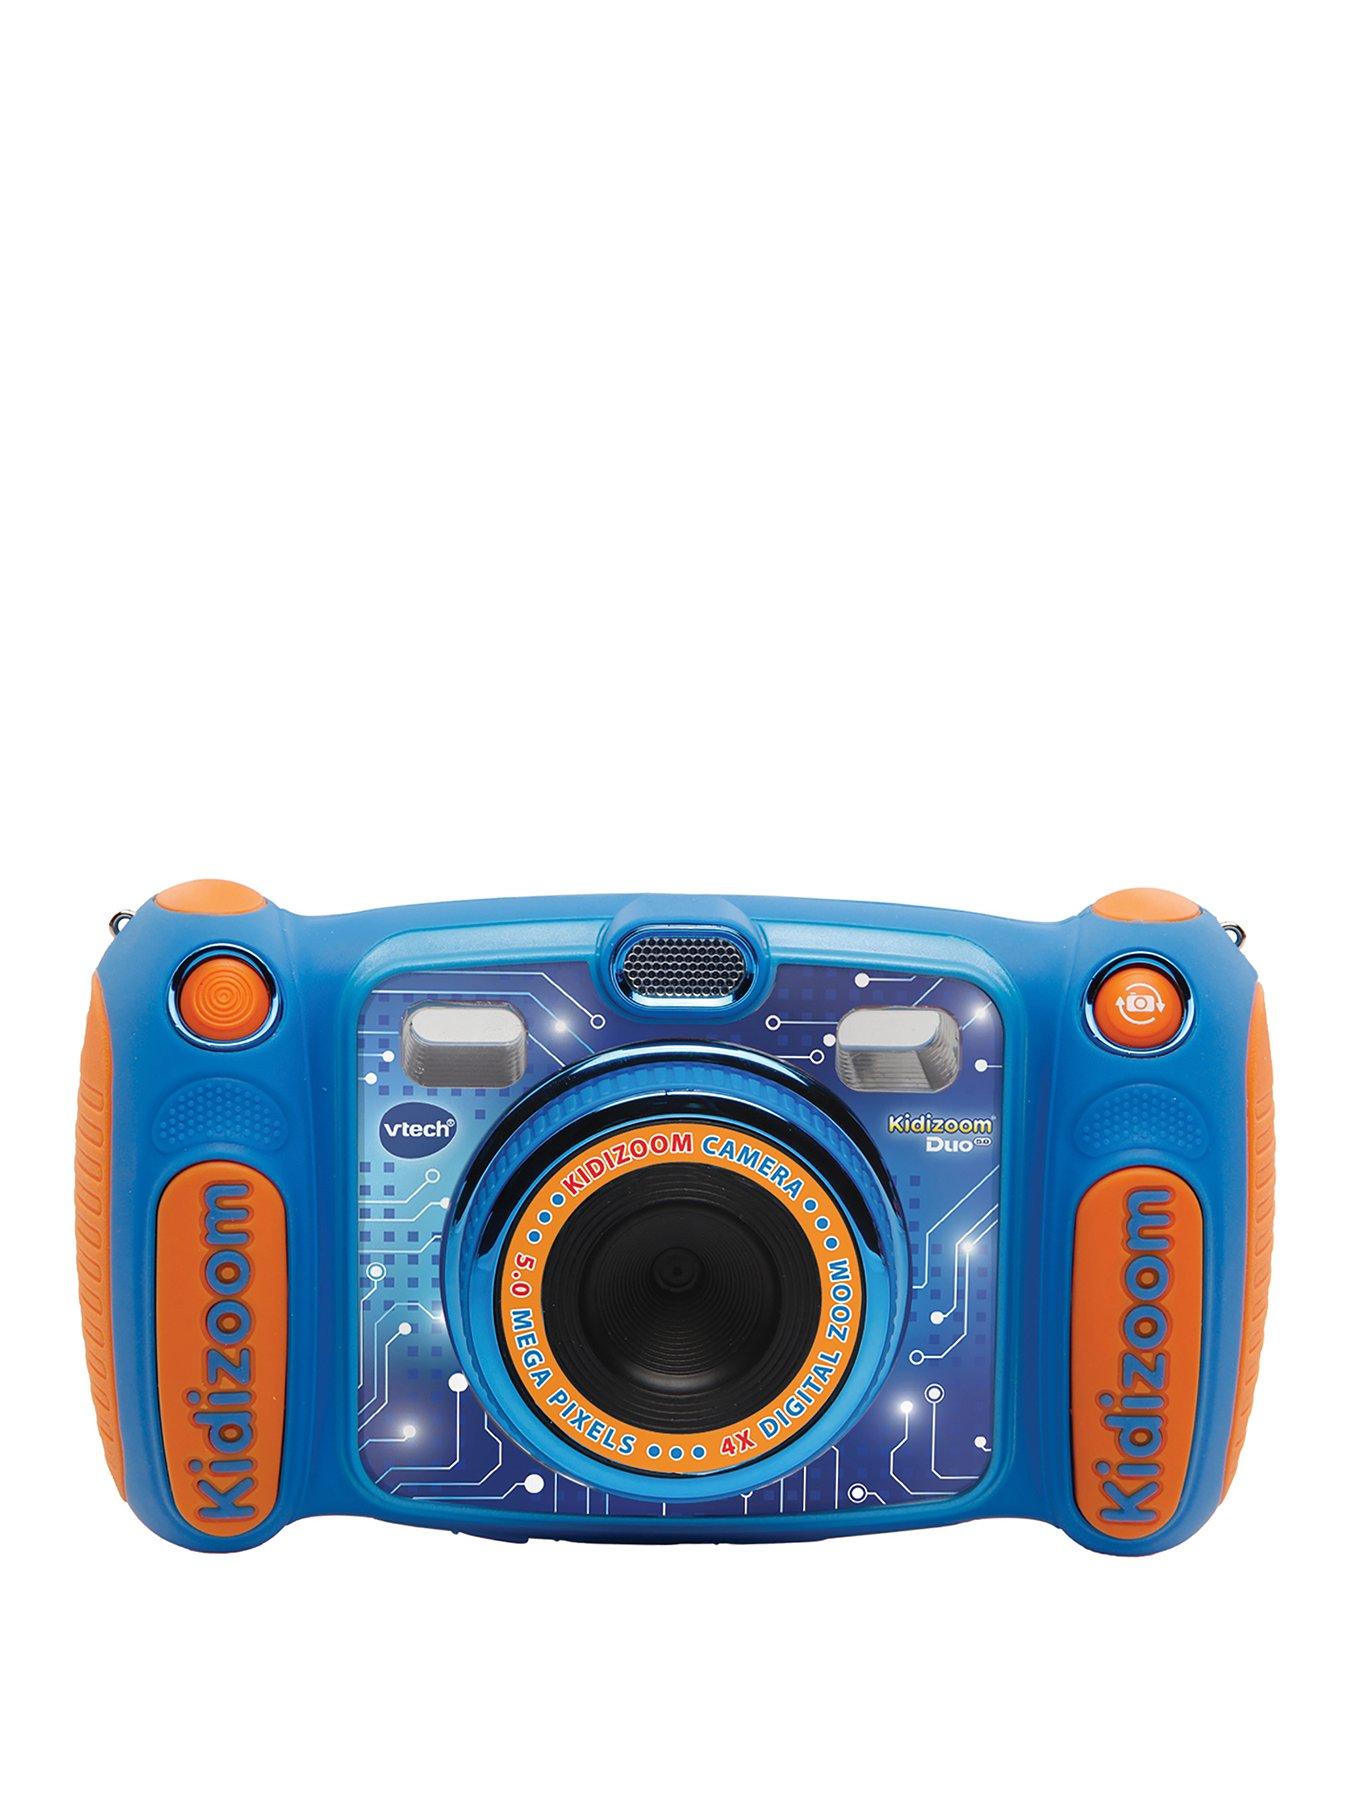 VTech Kidizoom Duo Digital Camera 2mp 4 X Zoom Blue Kids for sale online 